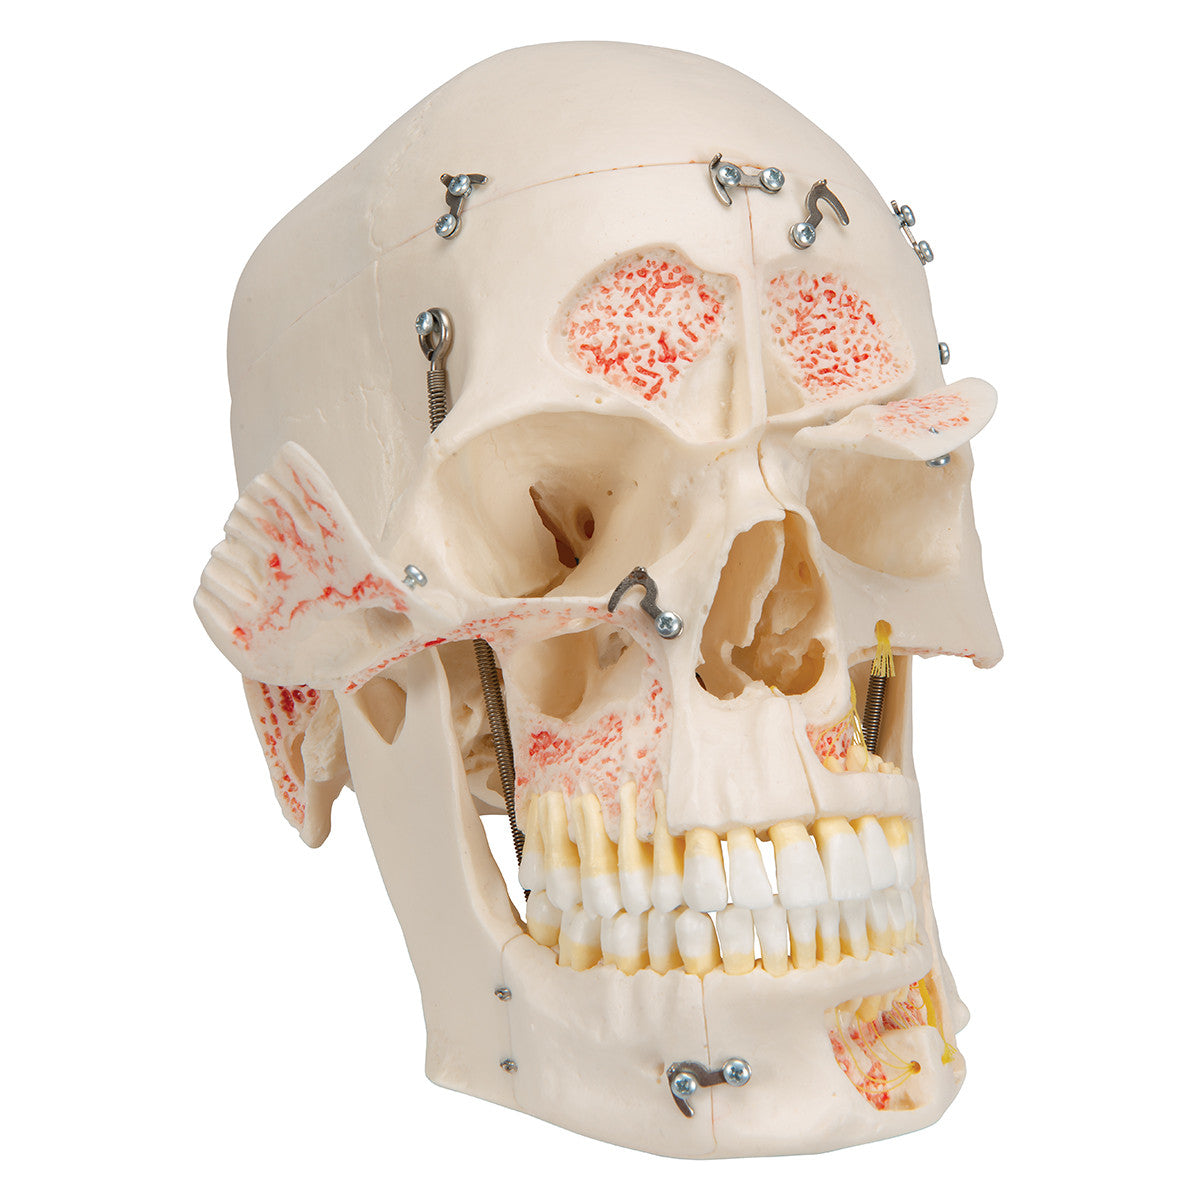 Deluxe Demonstration Skull | 3B Scientific A27